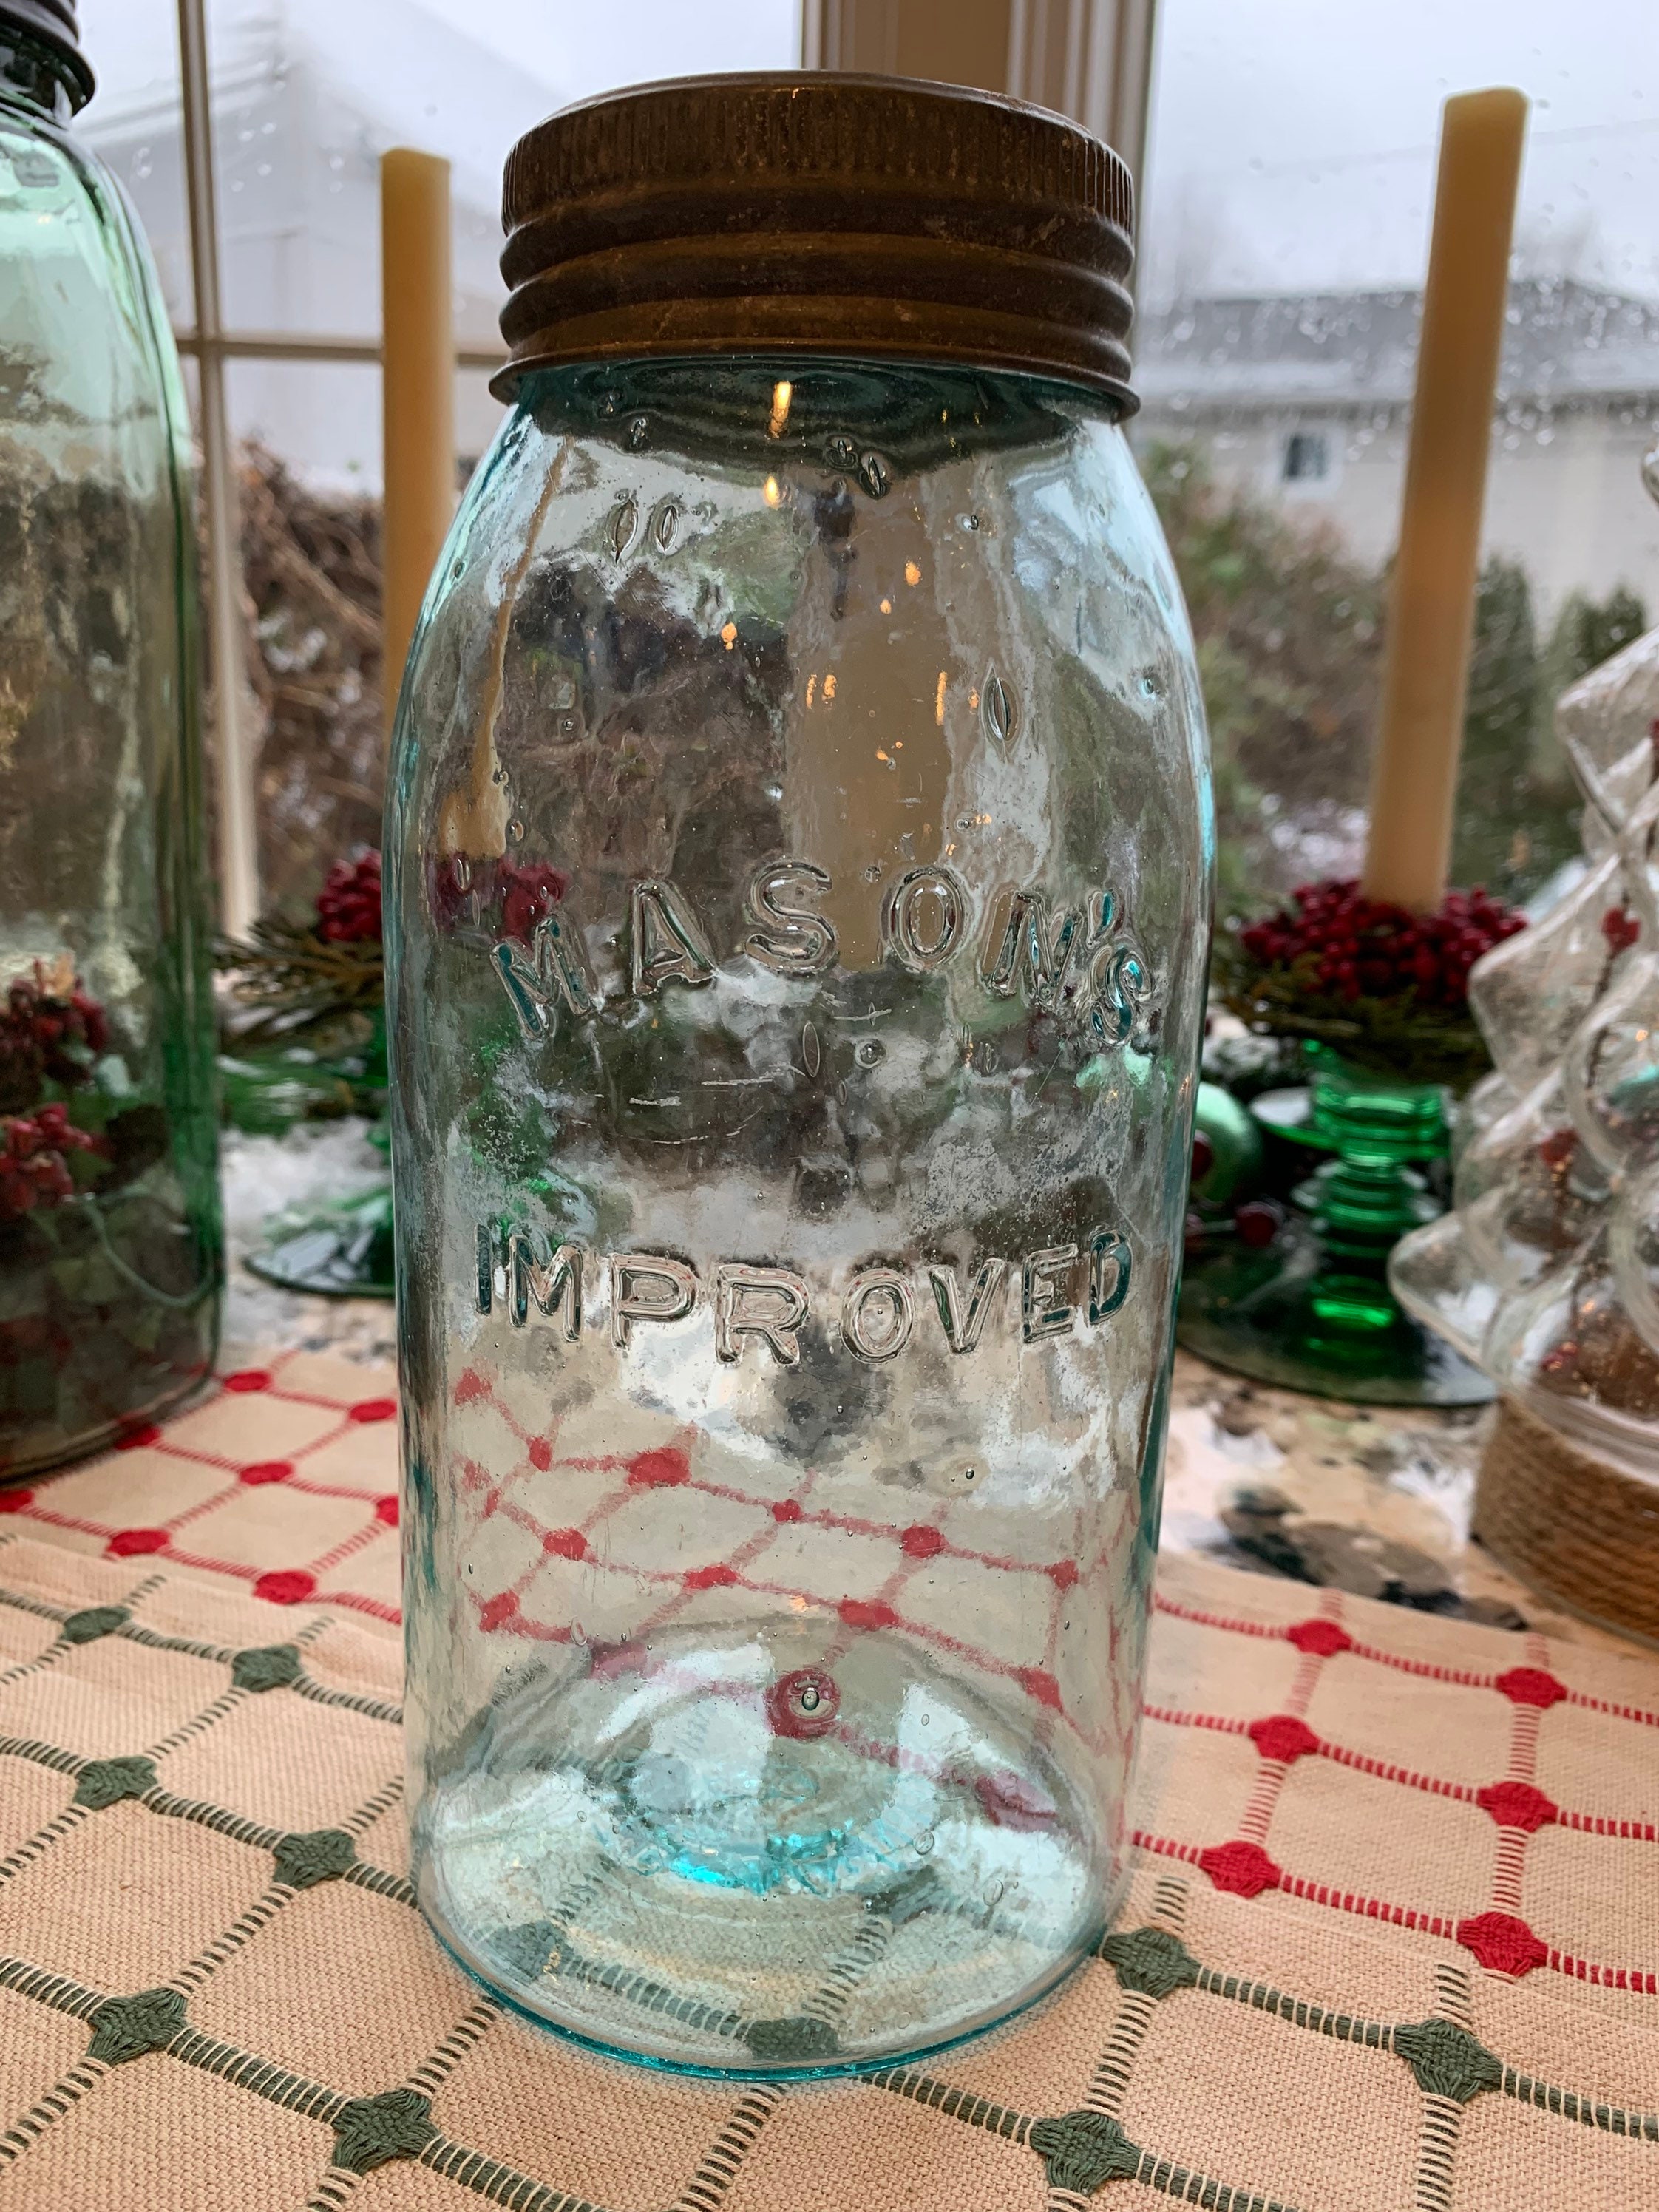 12 Pack: Half Gallon Glass Jar by Ashland® 